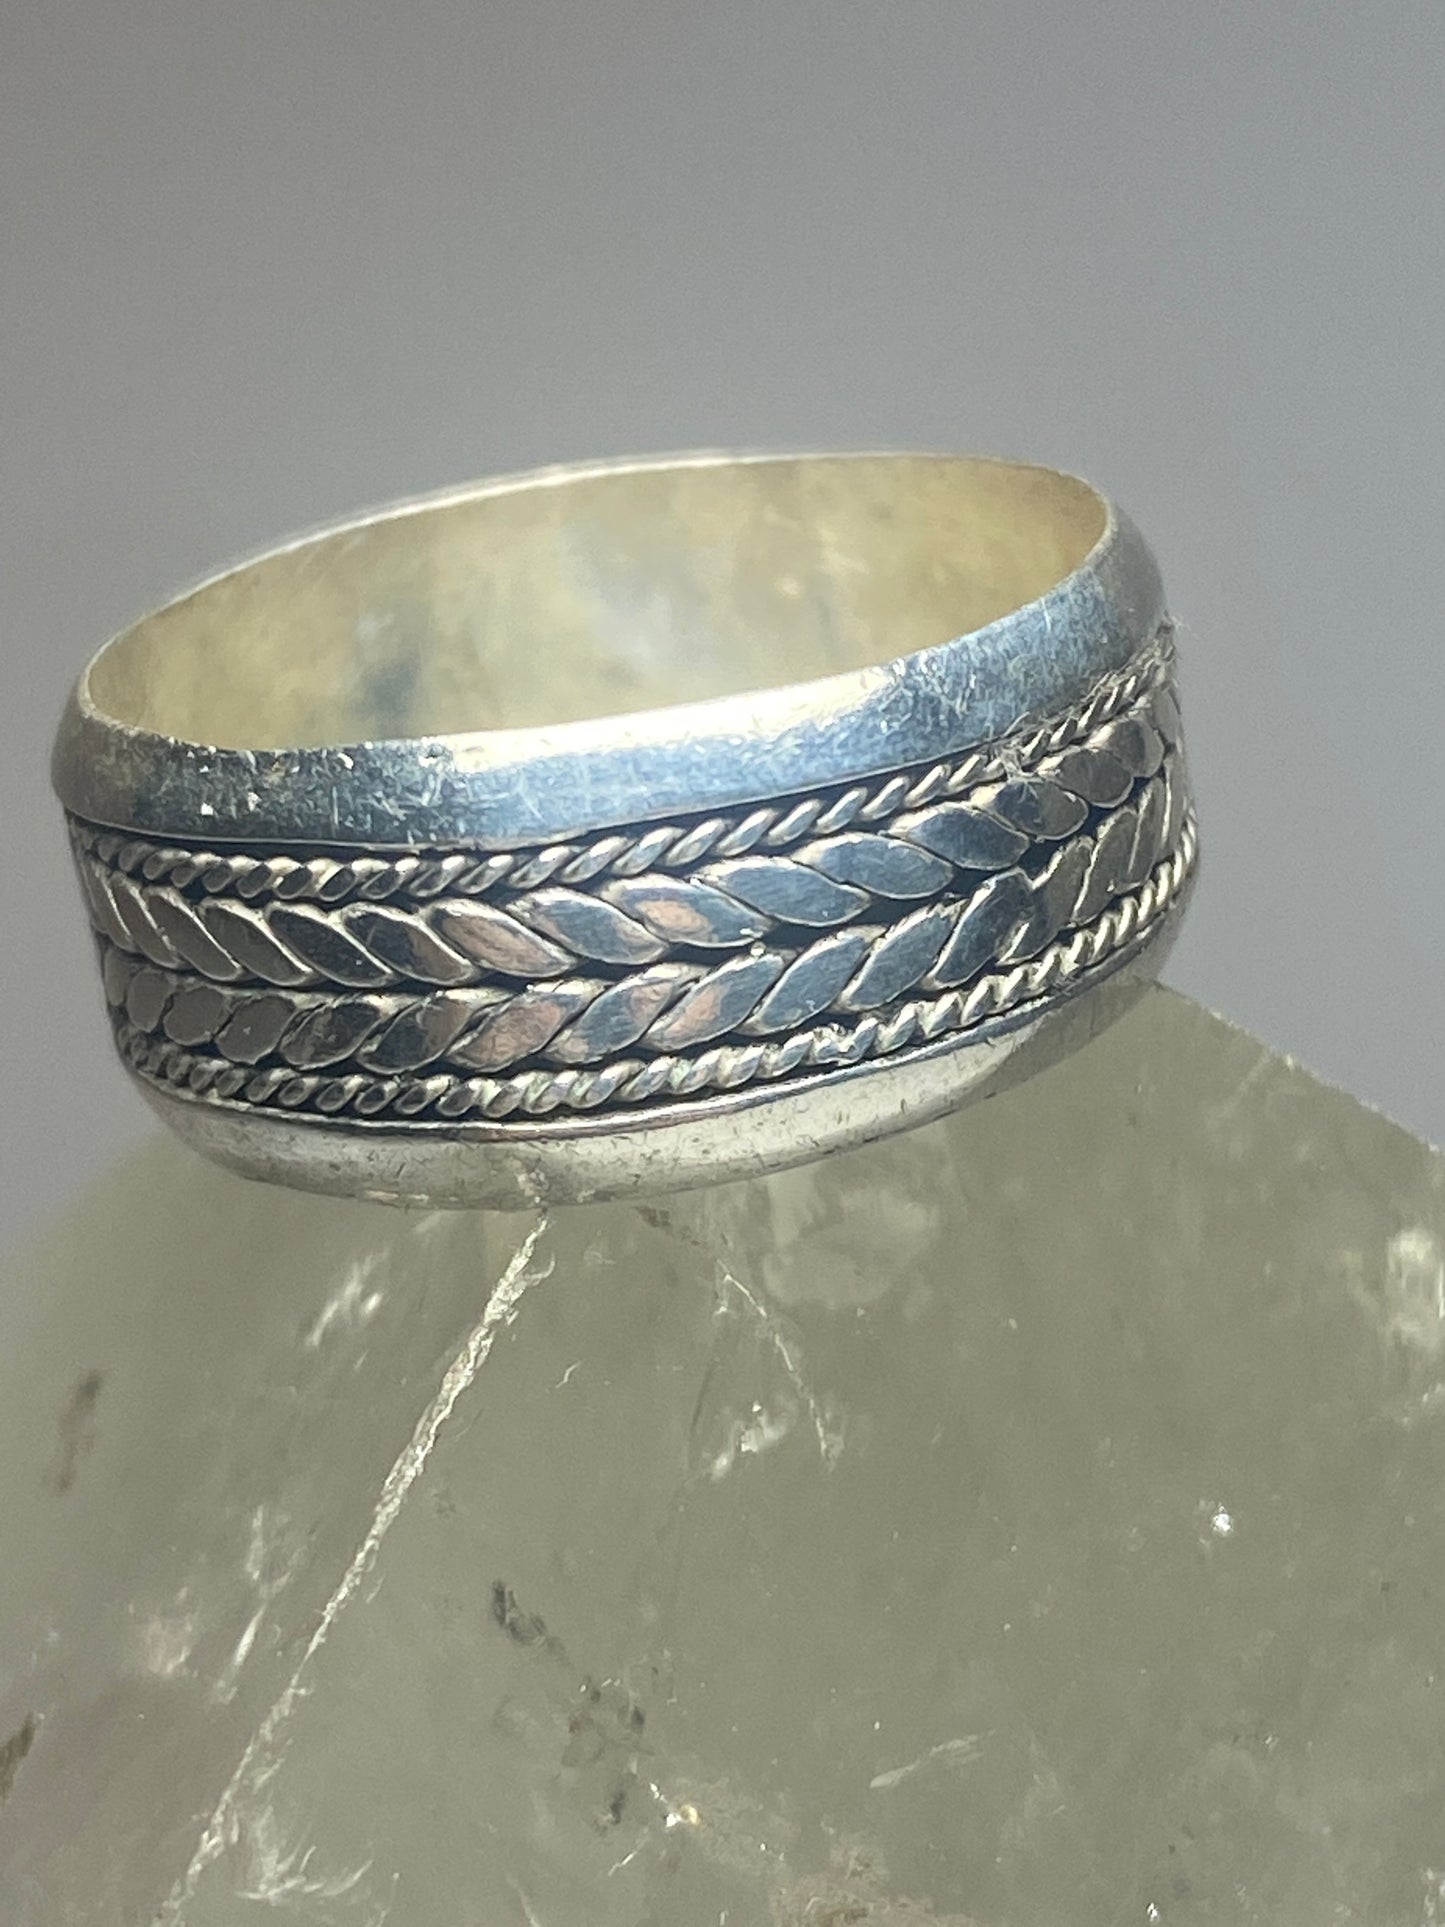 Knot ring herringbone woven rope sterling silver biker band men women